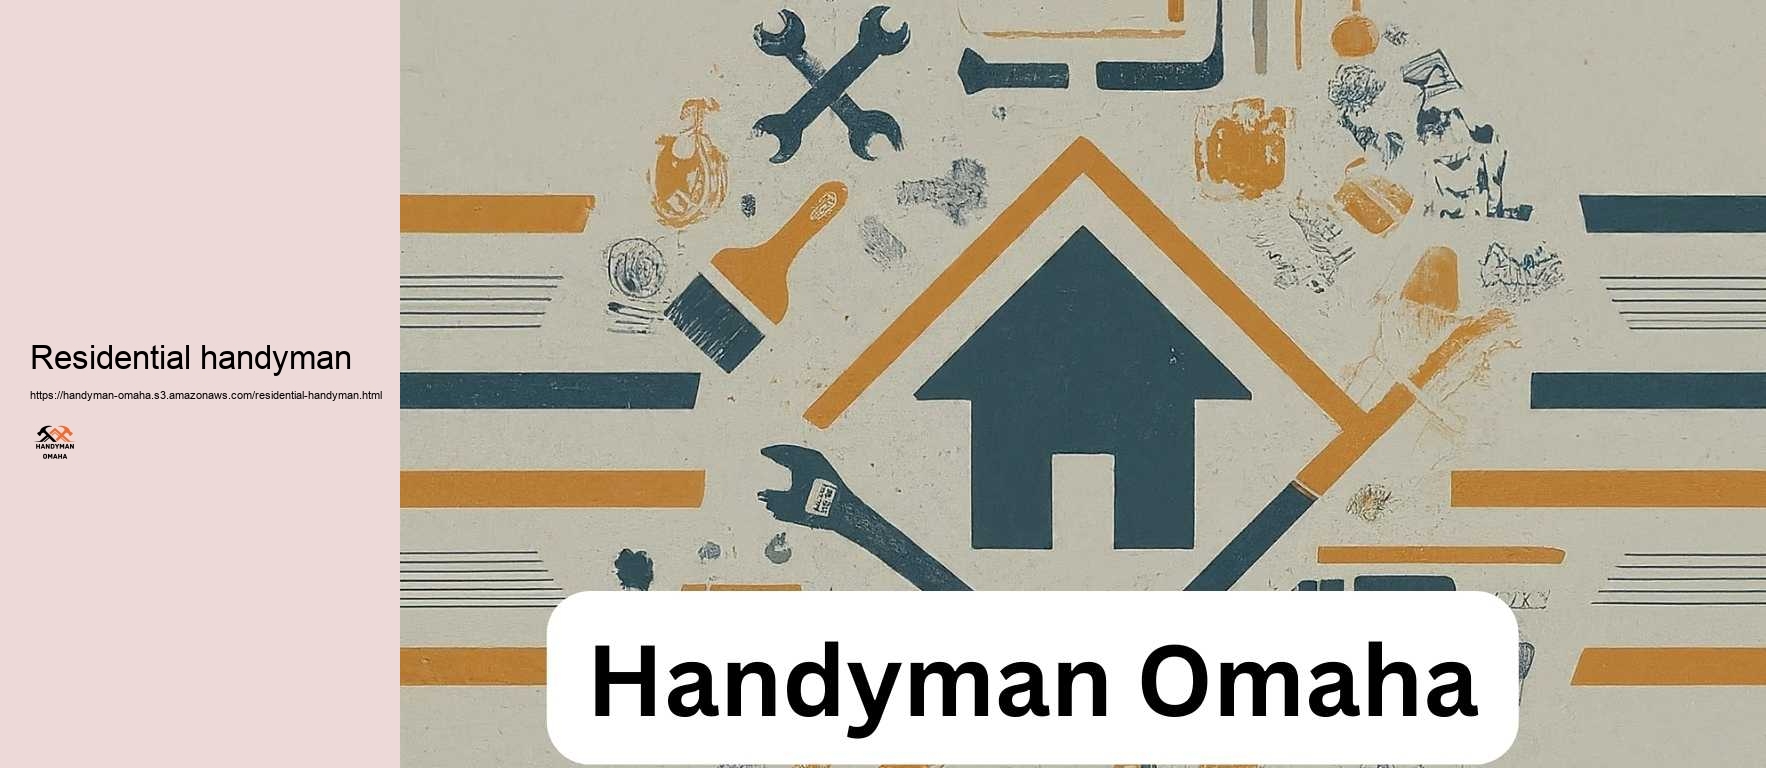 Residential handyman